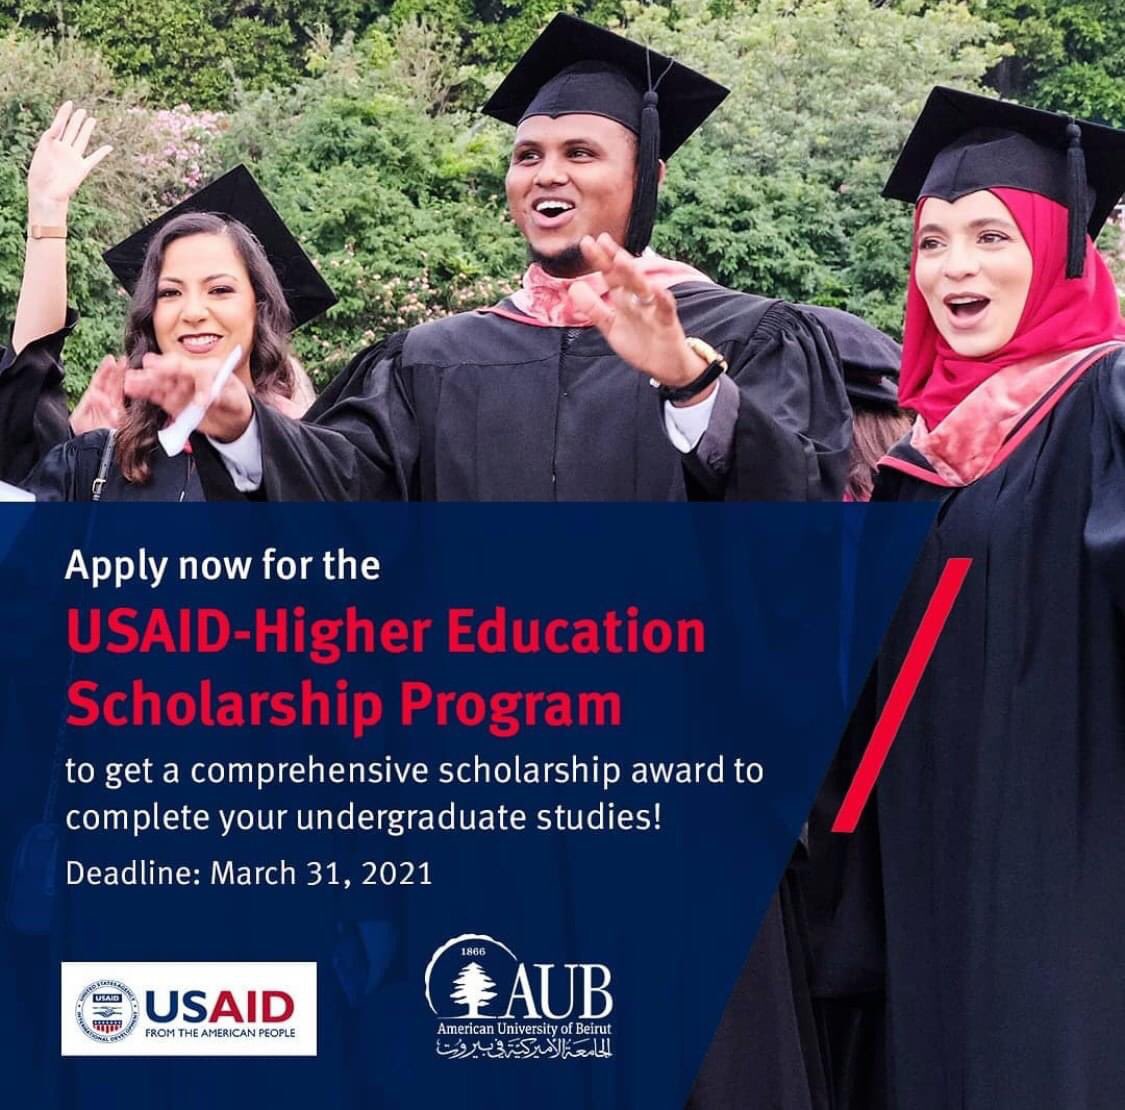 USAID-Higher Education Scholarship Program at #AUB! USAID Lebanon 
Apply now to the fully funded undergraduate scholarship award:
www-banner.aub.edu.lb/pls/weba/BWSKA…

Deadline for Fall 2021-22 is March 31, 2021.

#USAID #highereducation #highereducationscholarship #undergraduate